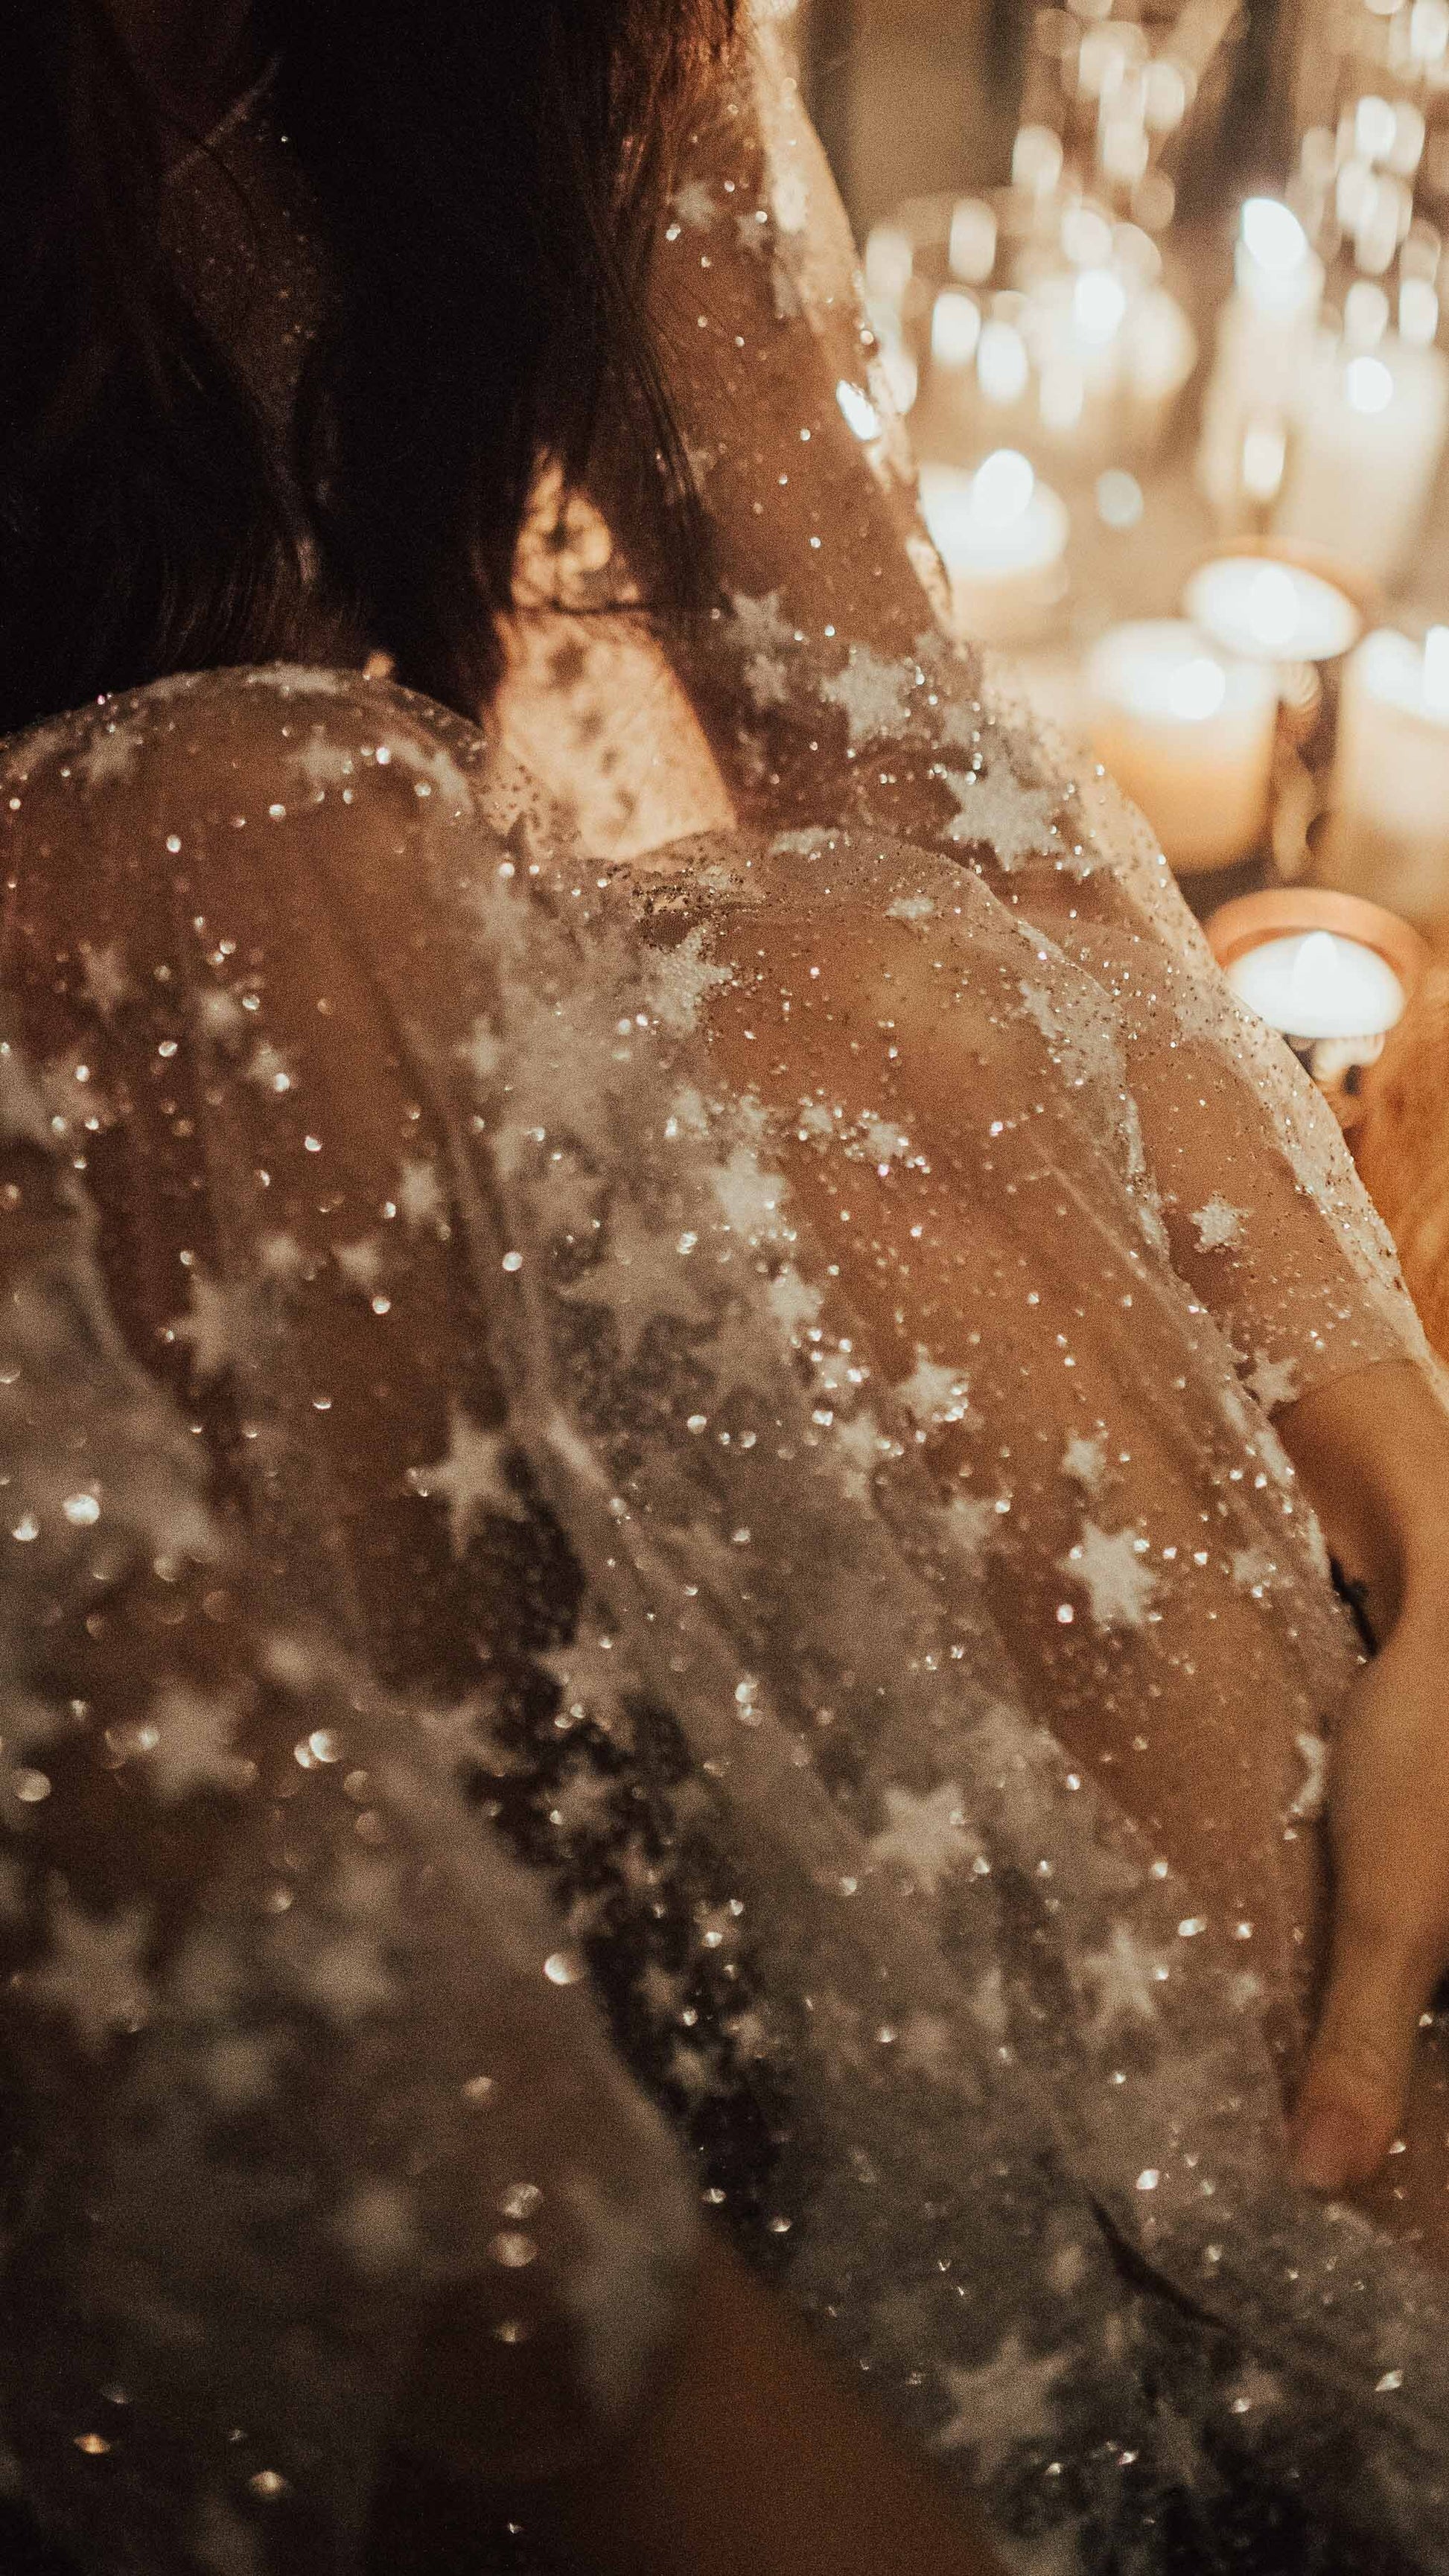  Fairytale Ethereal Dream Elegant Modern Long Sleeve Wedding Dress with Stars